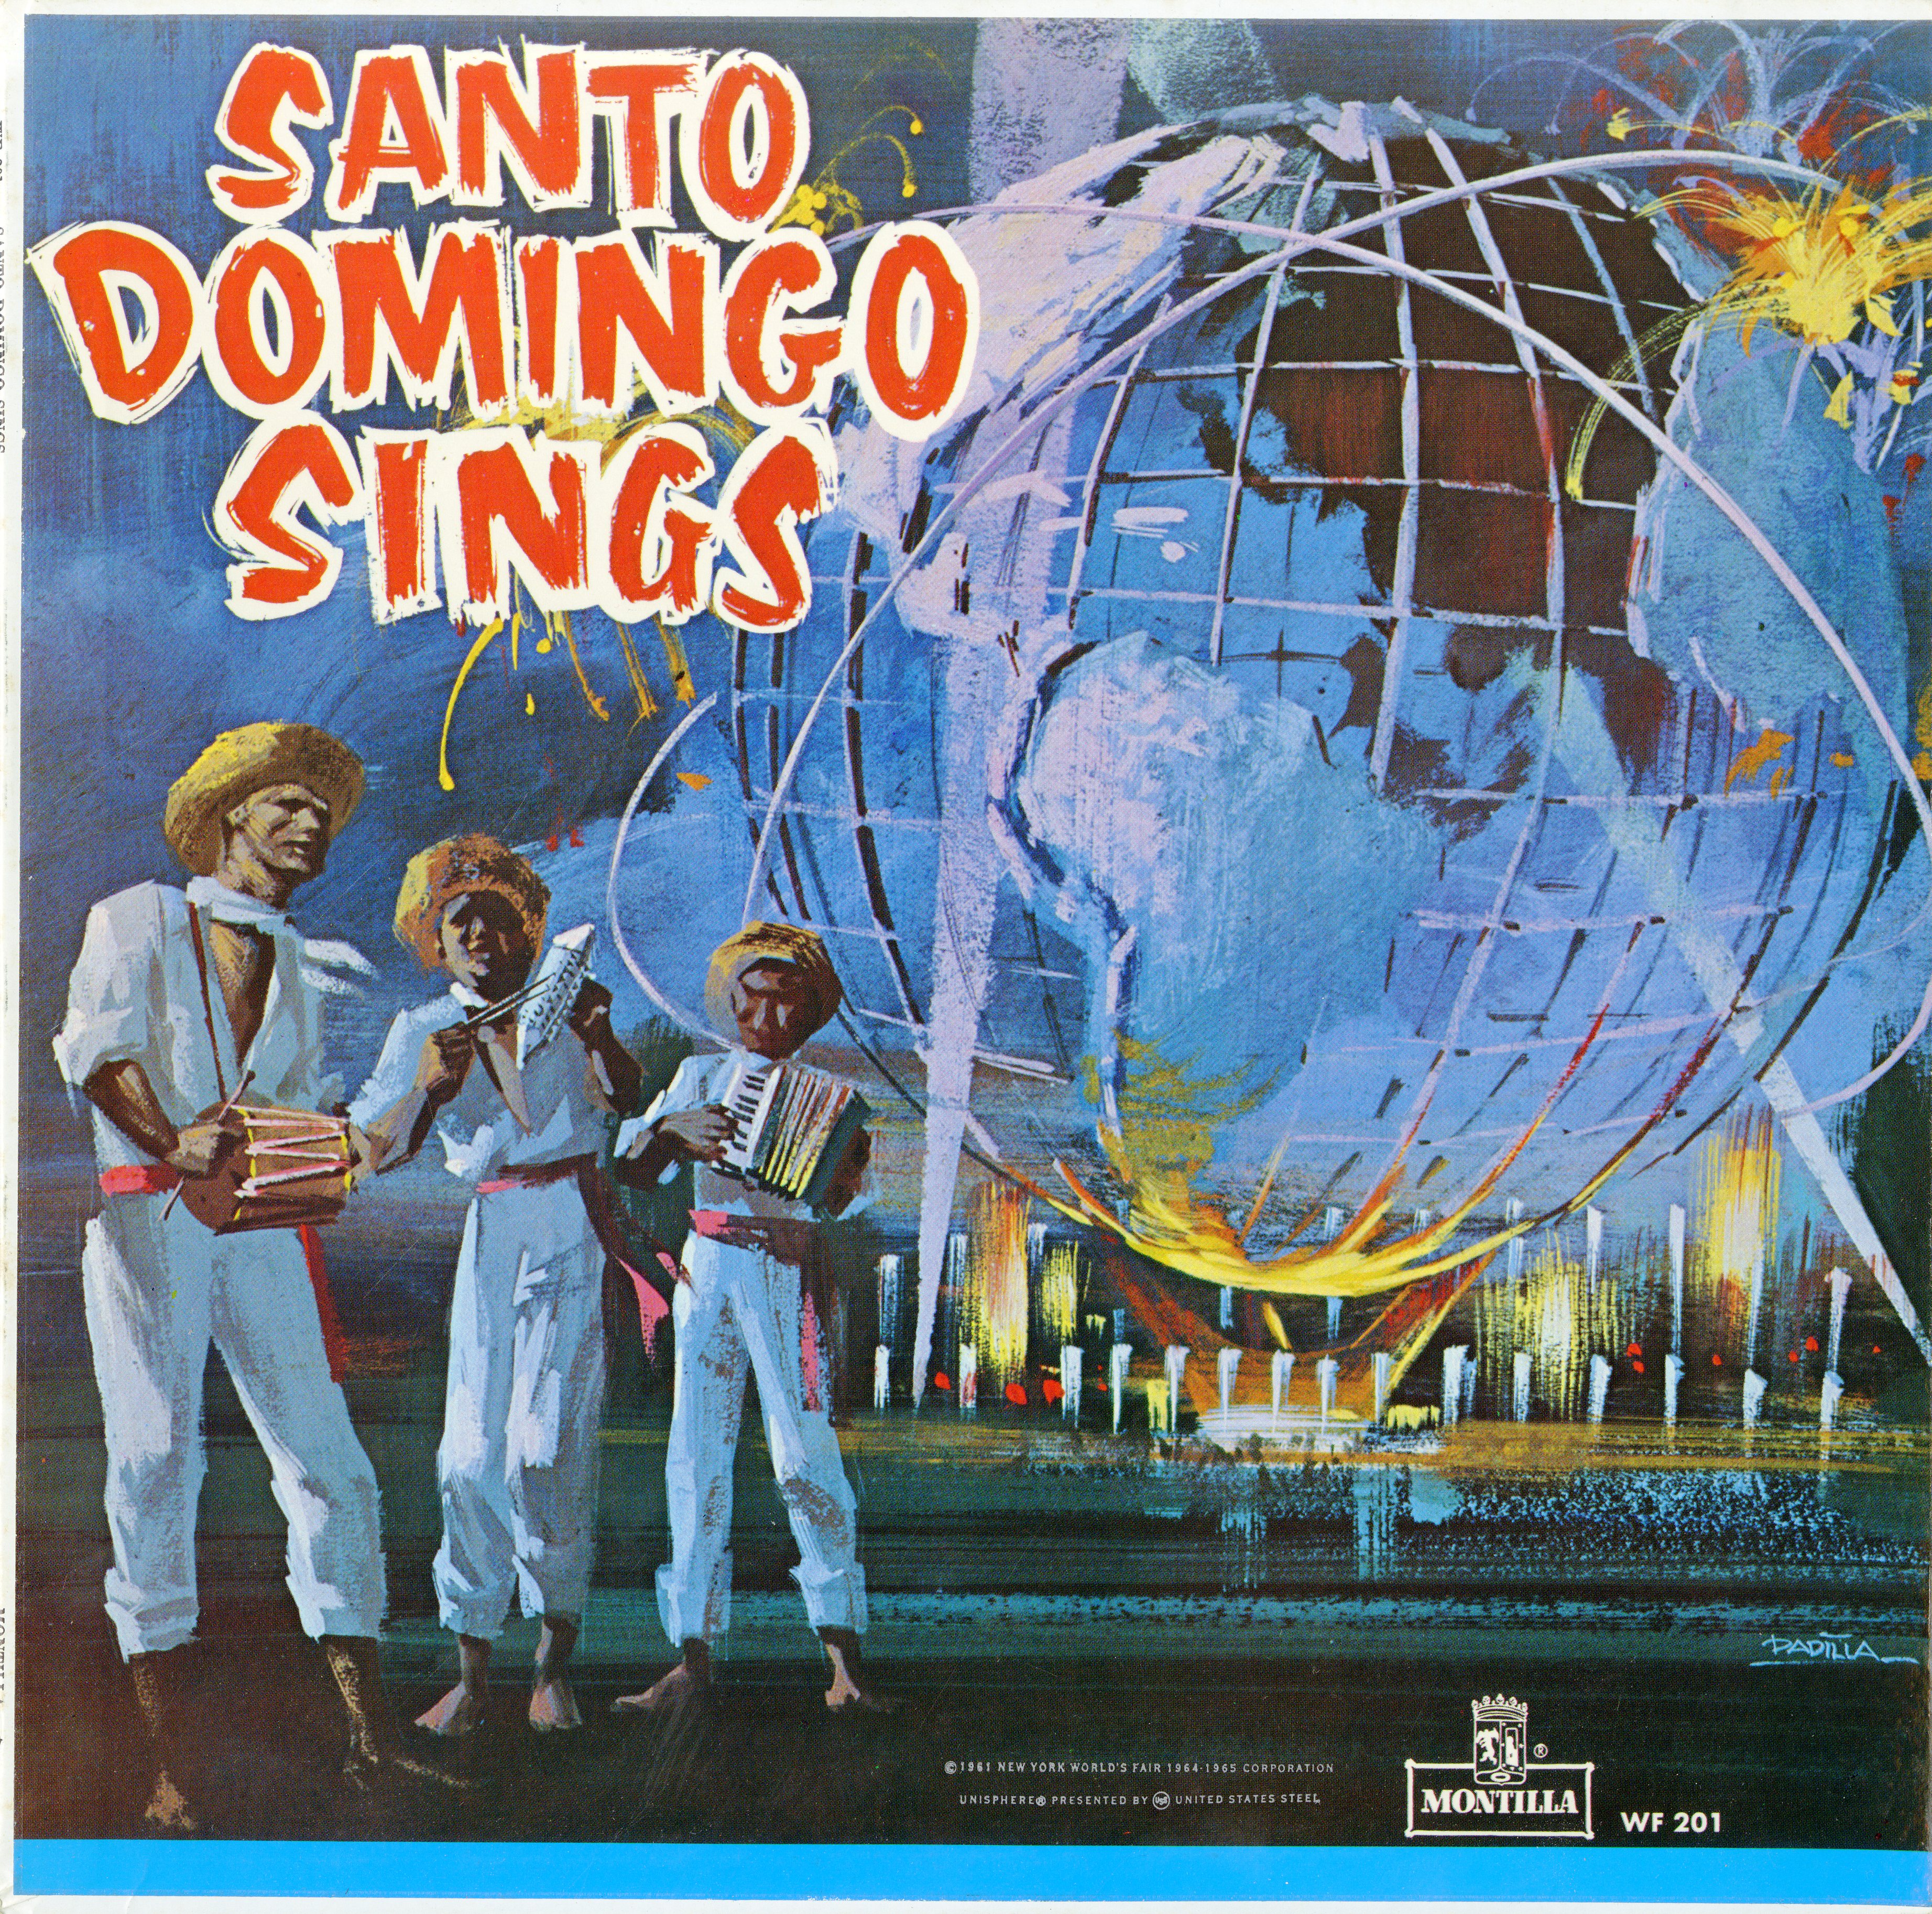 Santo Domingo Sings-Dominican Pavilion New York Worlds Fair 1964-65, LP Album Cover, 1964